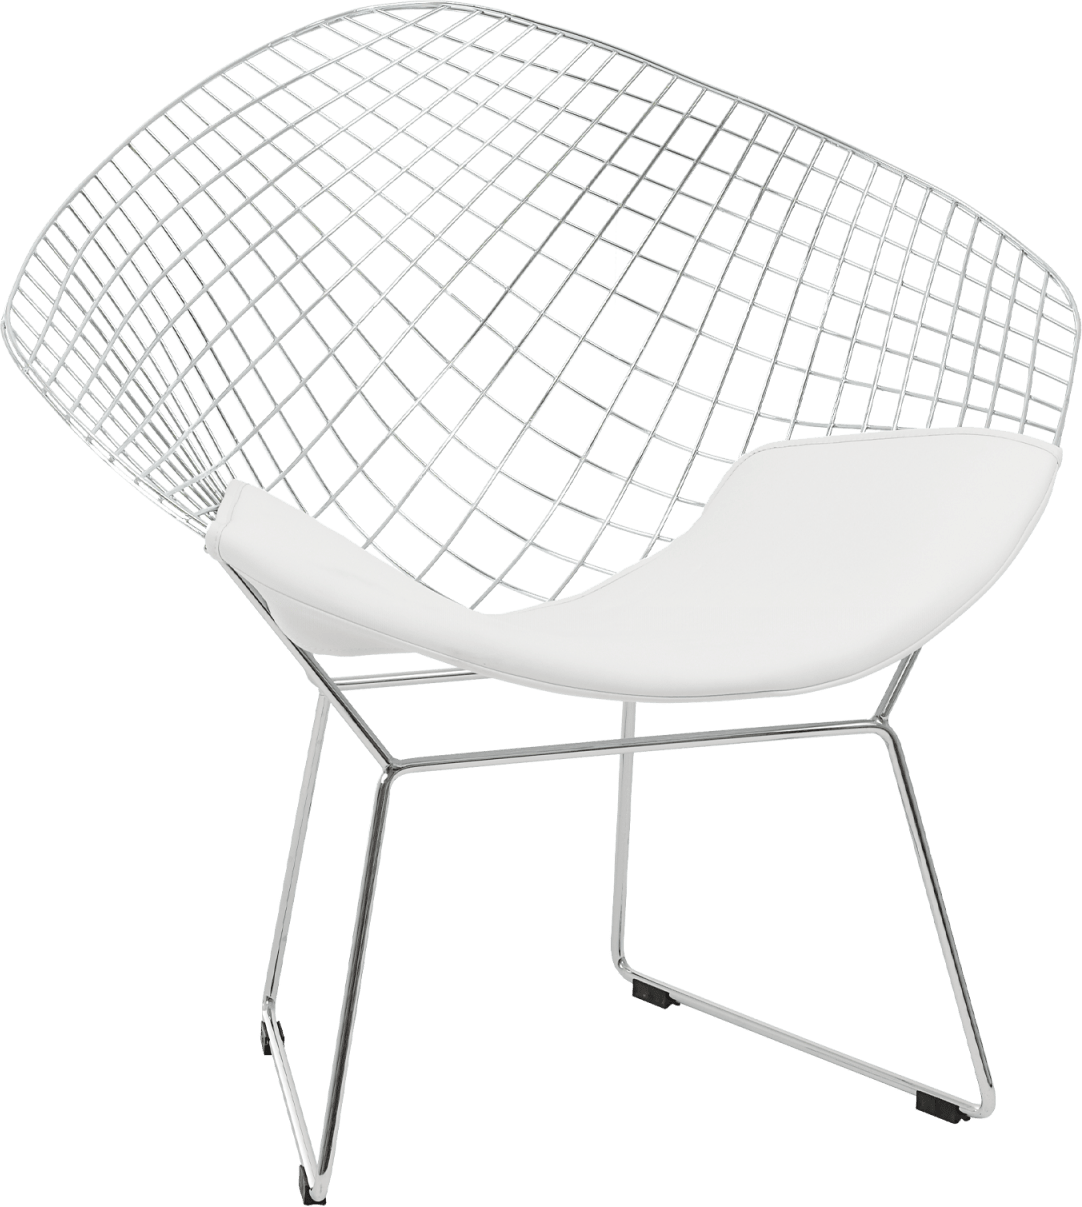 Bertoai Diamond Chair Hire for Events